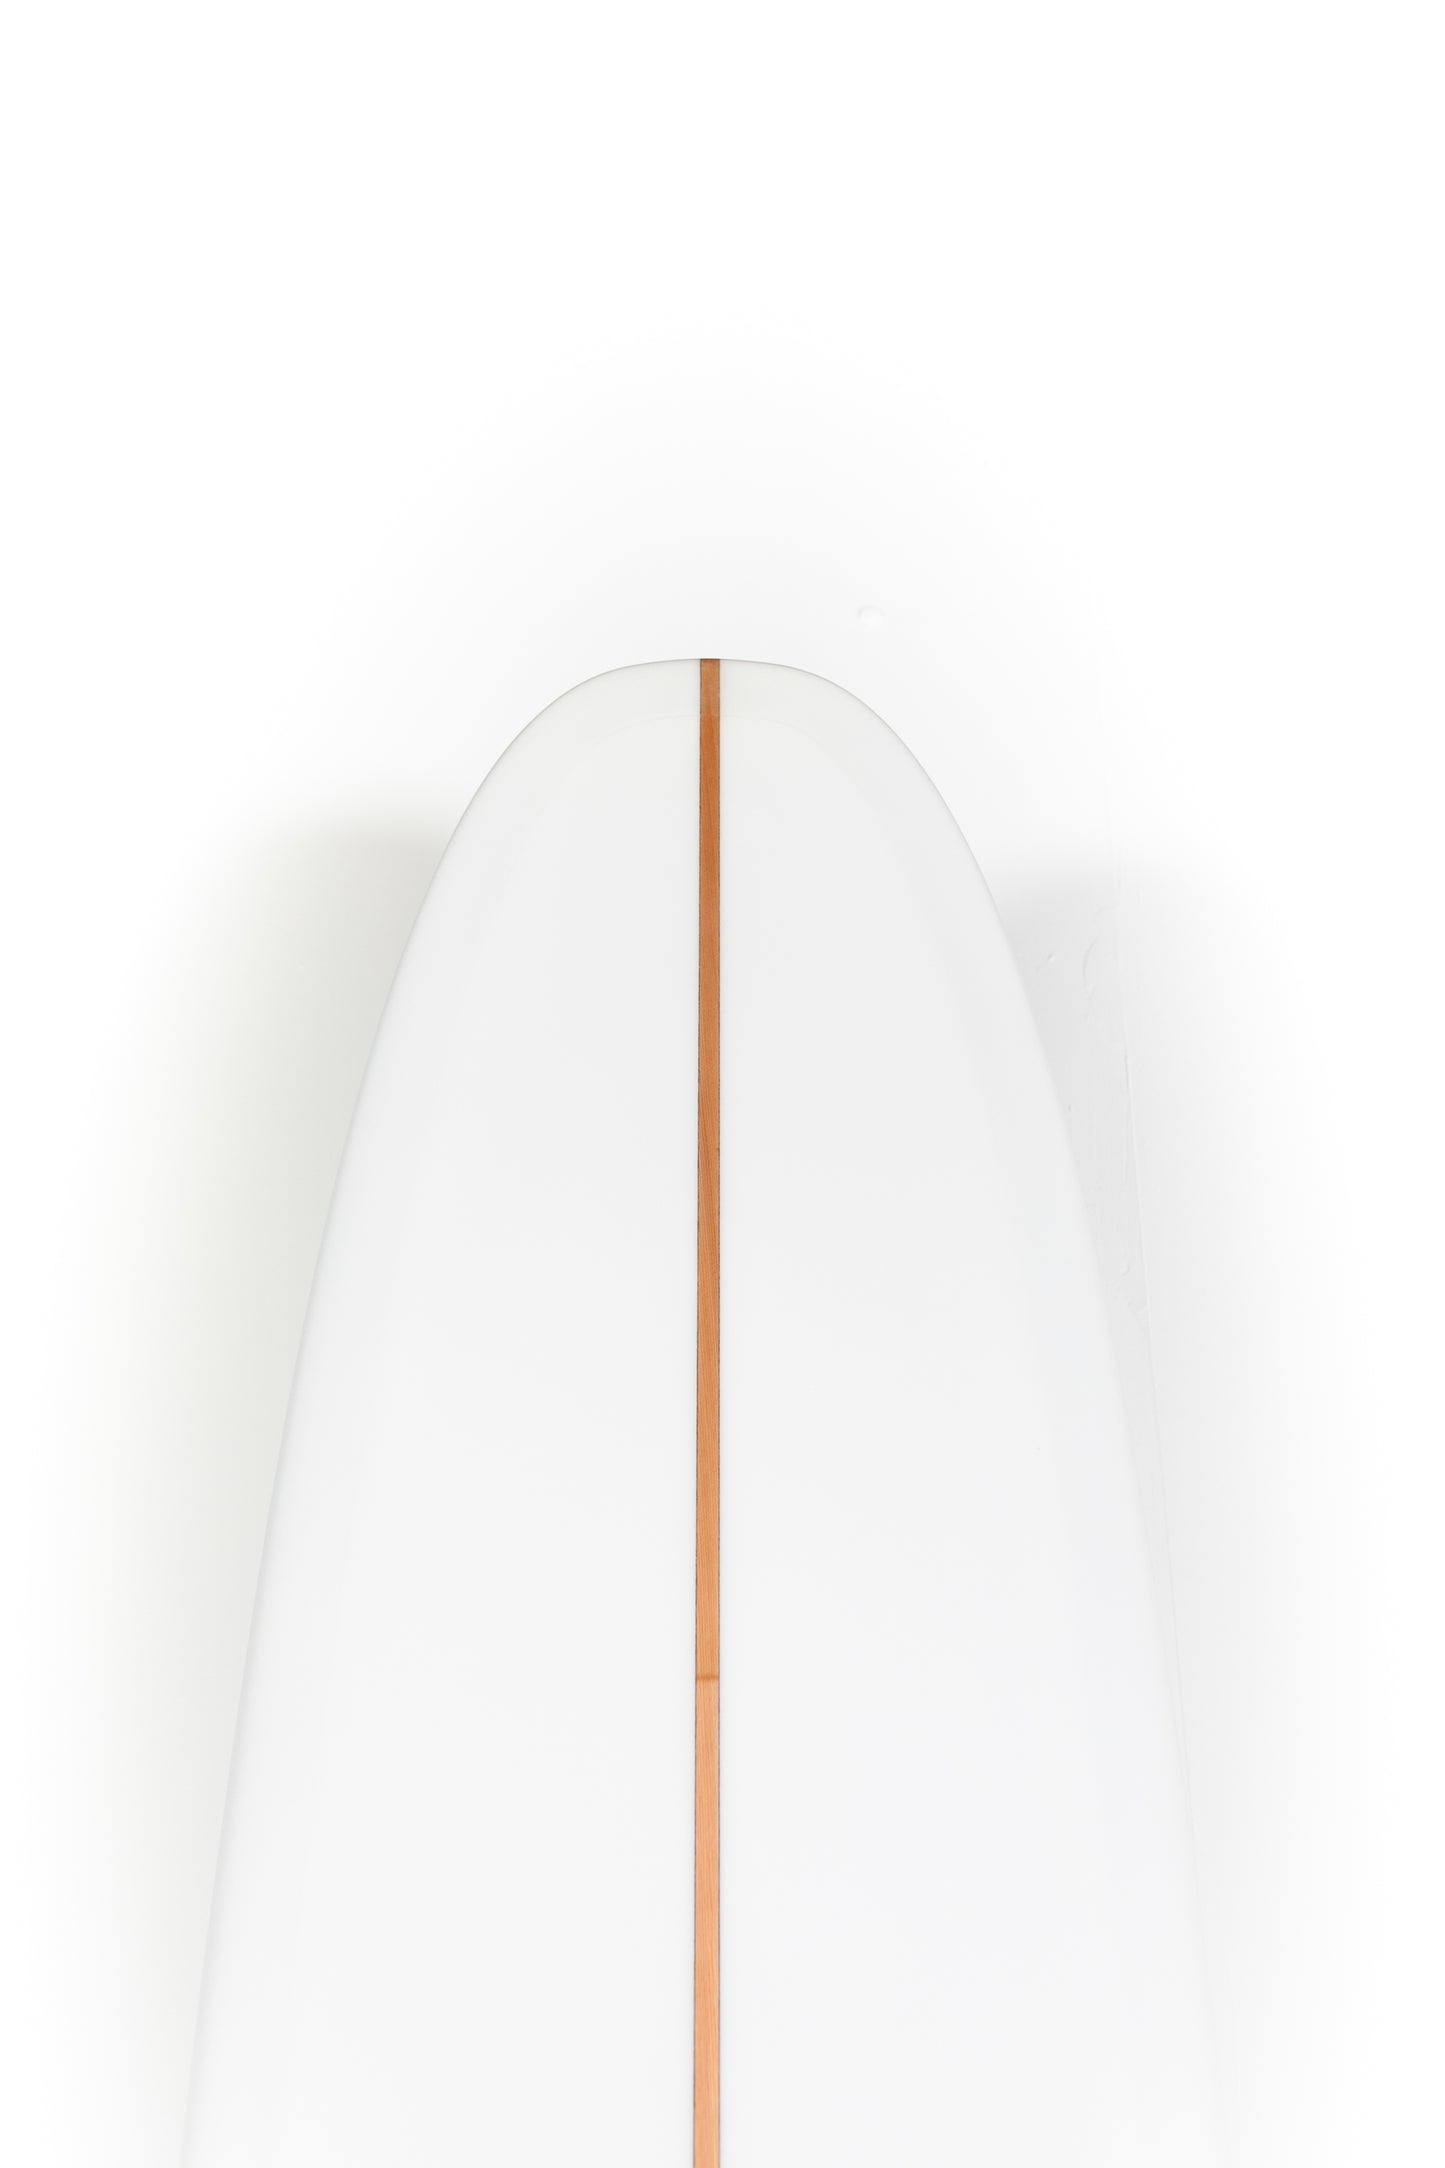 
                  
                    Pukas Surf Shop - Channel Islands - CI LOG by Al Merrick - 9'3" x 23 x 3 1/8 - 76,45L - CI28626
                  
                